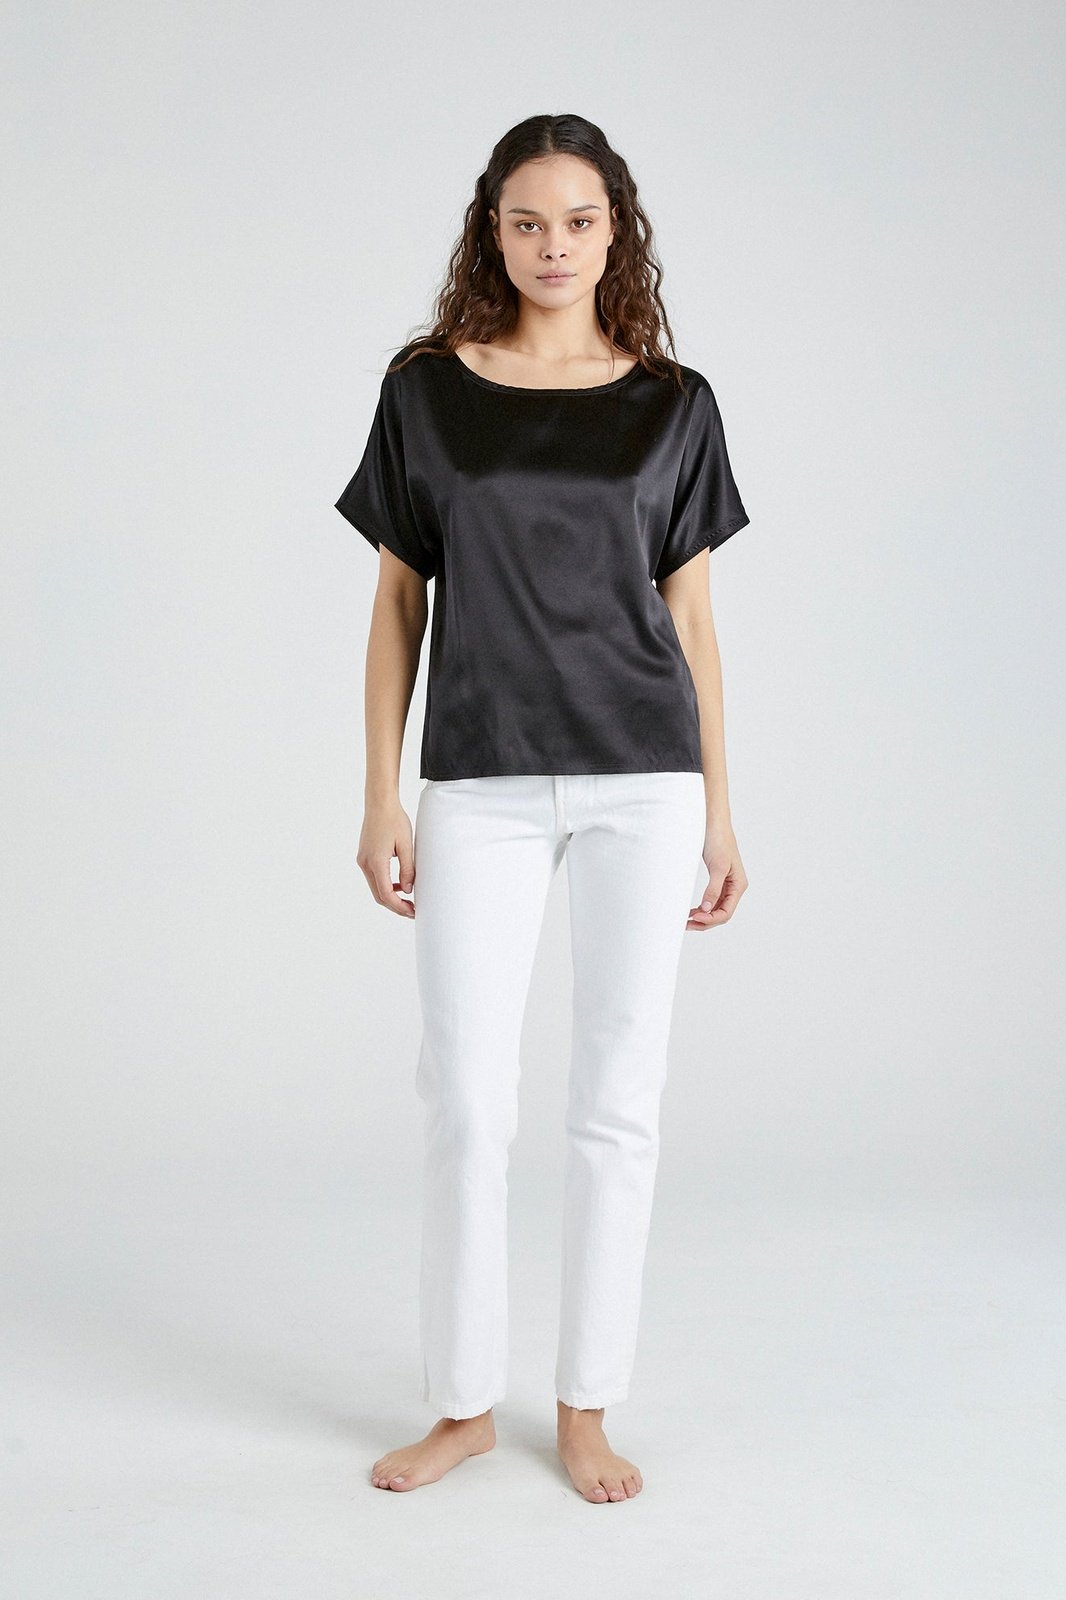 +Beryll Silk Shirt Erica | Black - +Beryll Silk Shirt Erica | Black - +Beryll Worn By Good People